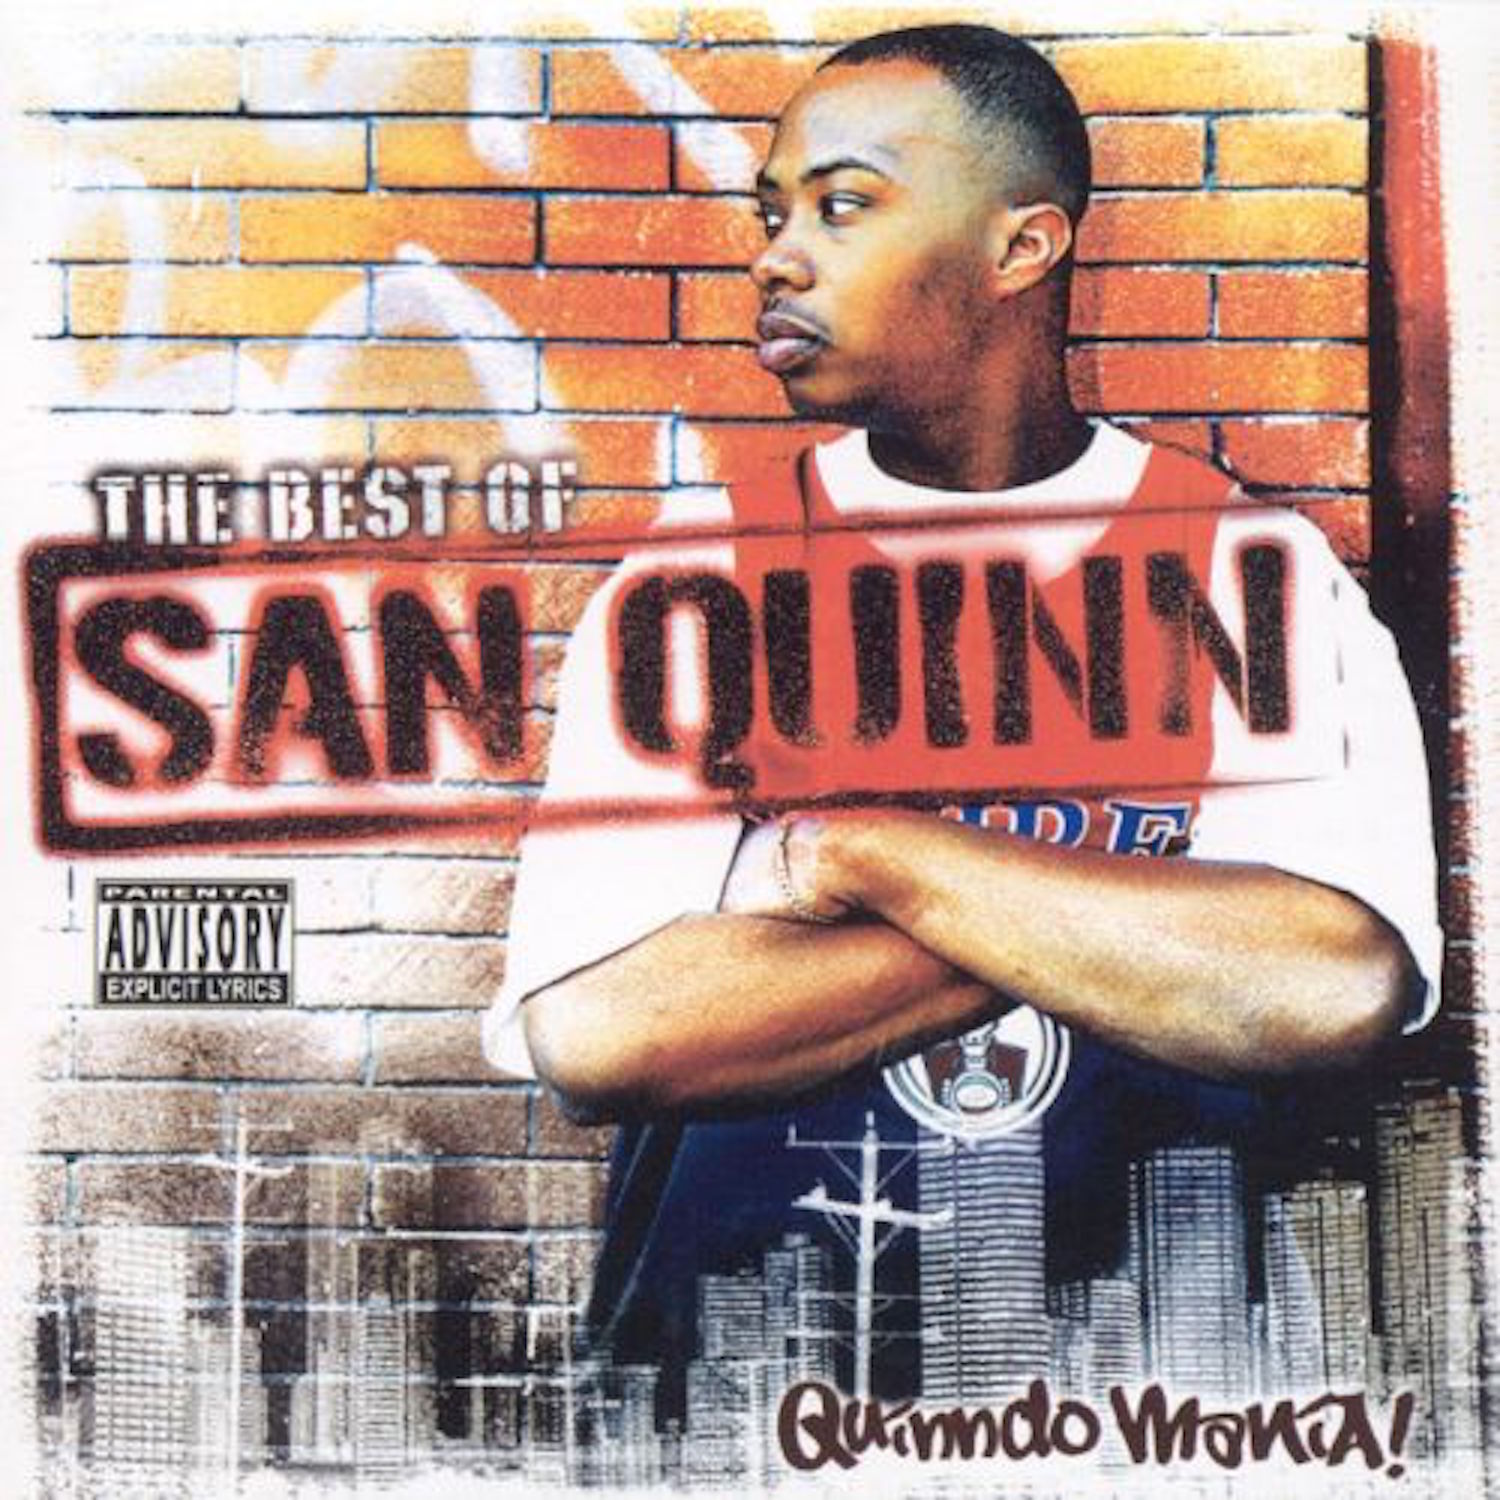 Quinndo Mania! The Best of San Quinn